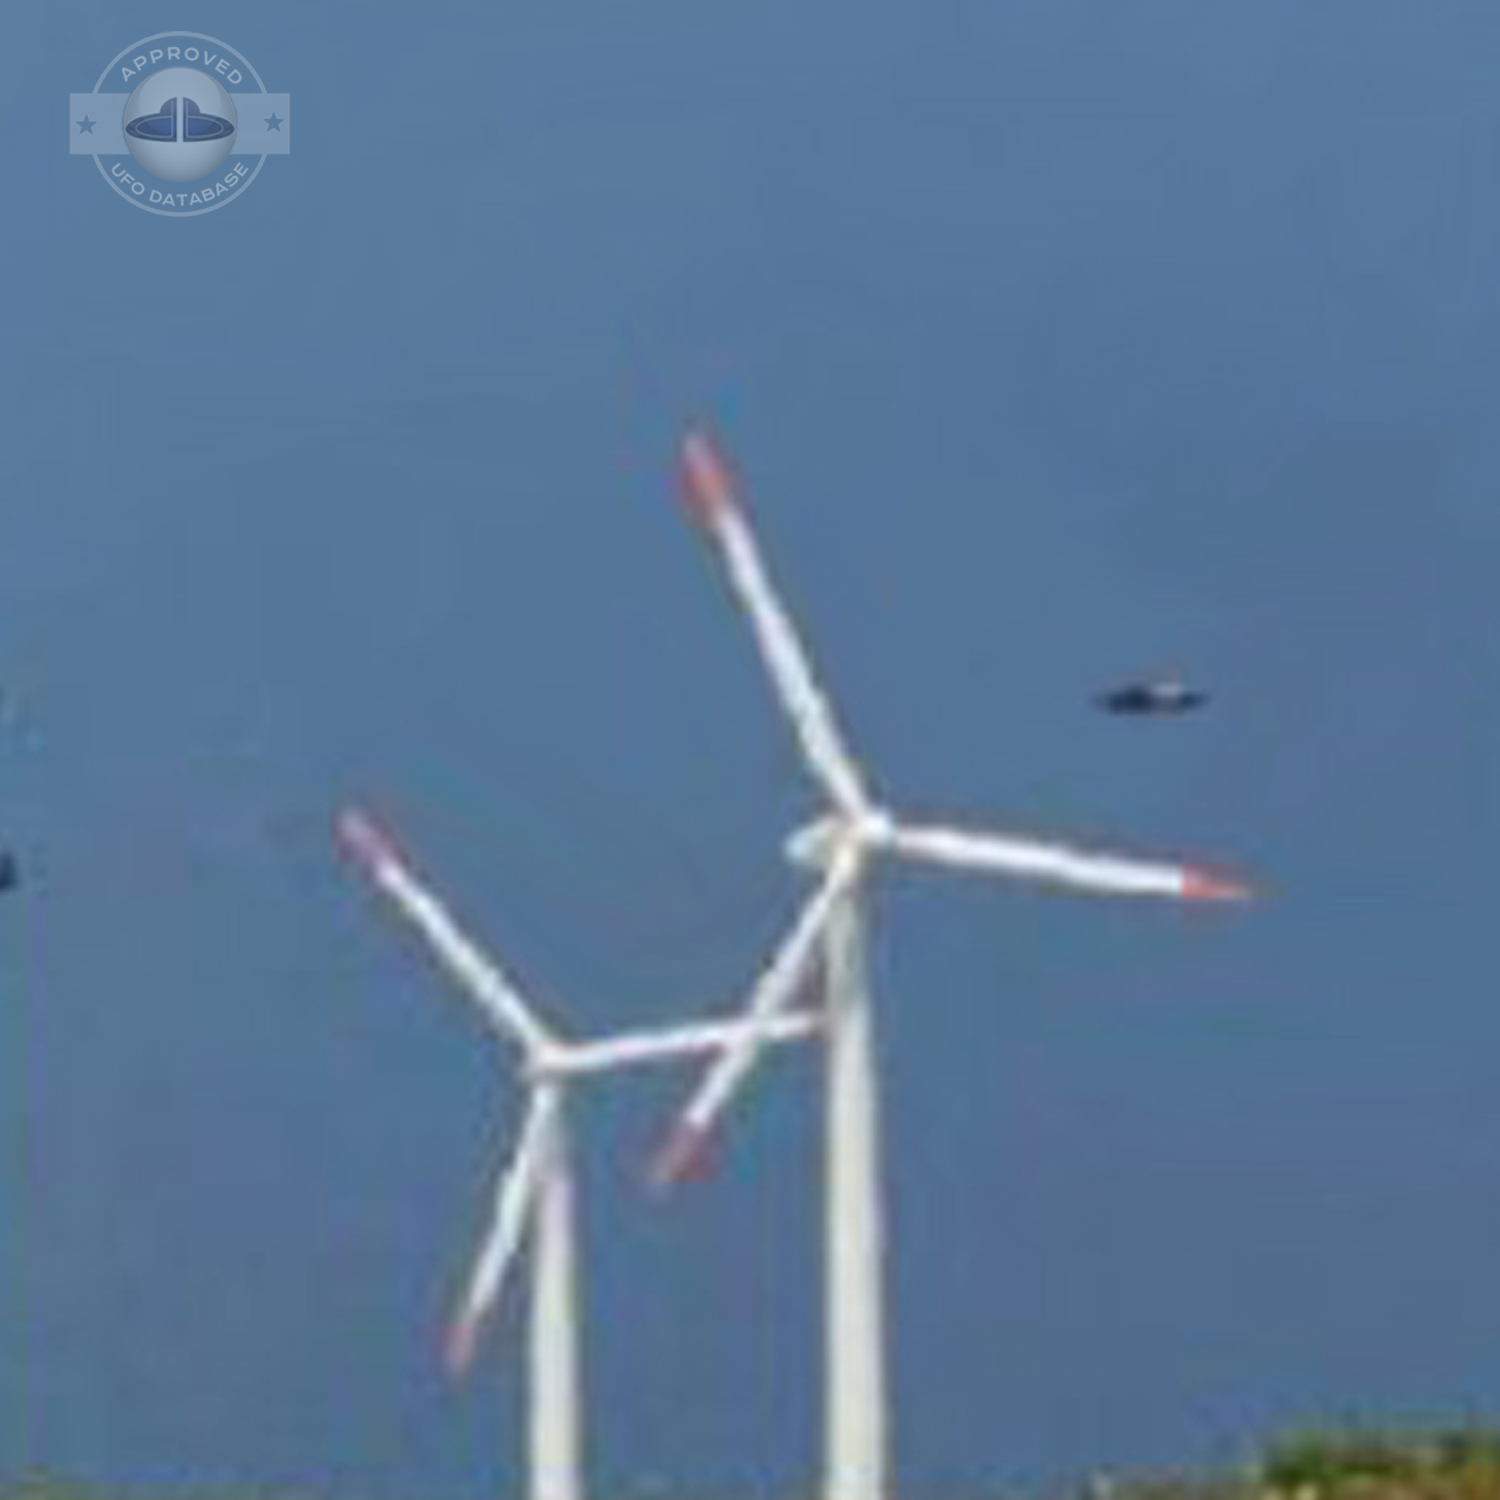 UFO near power lines and Wind turbines | Bulgaria Black Sea Coast 2005 UFO Picture #210-3